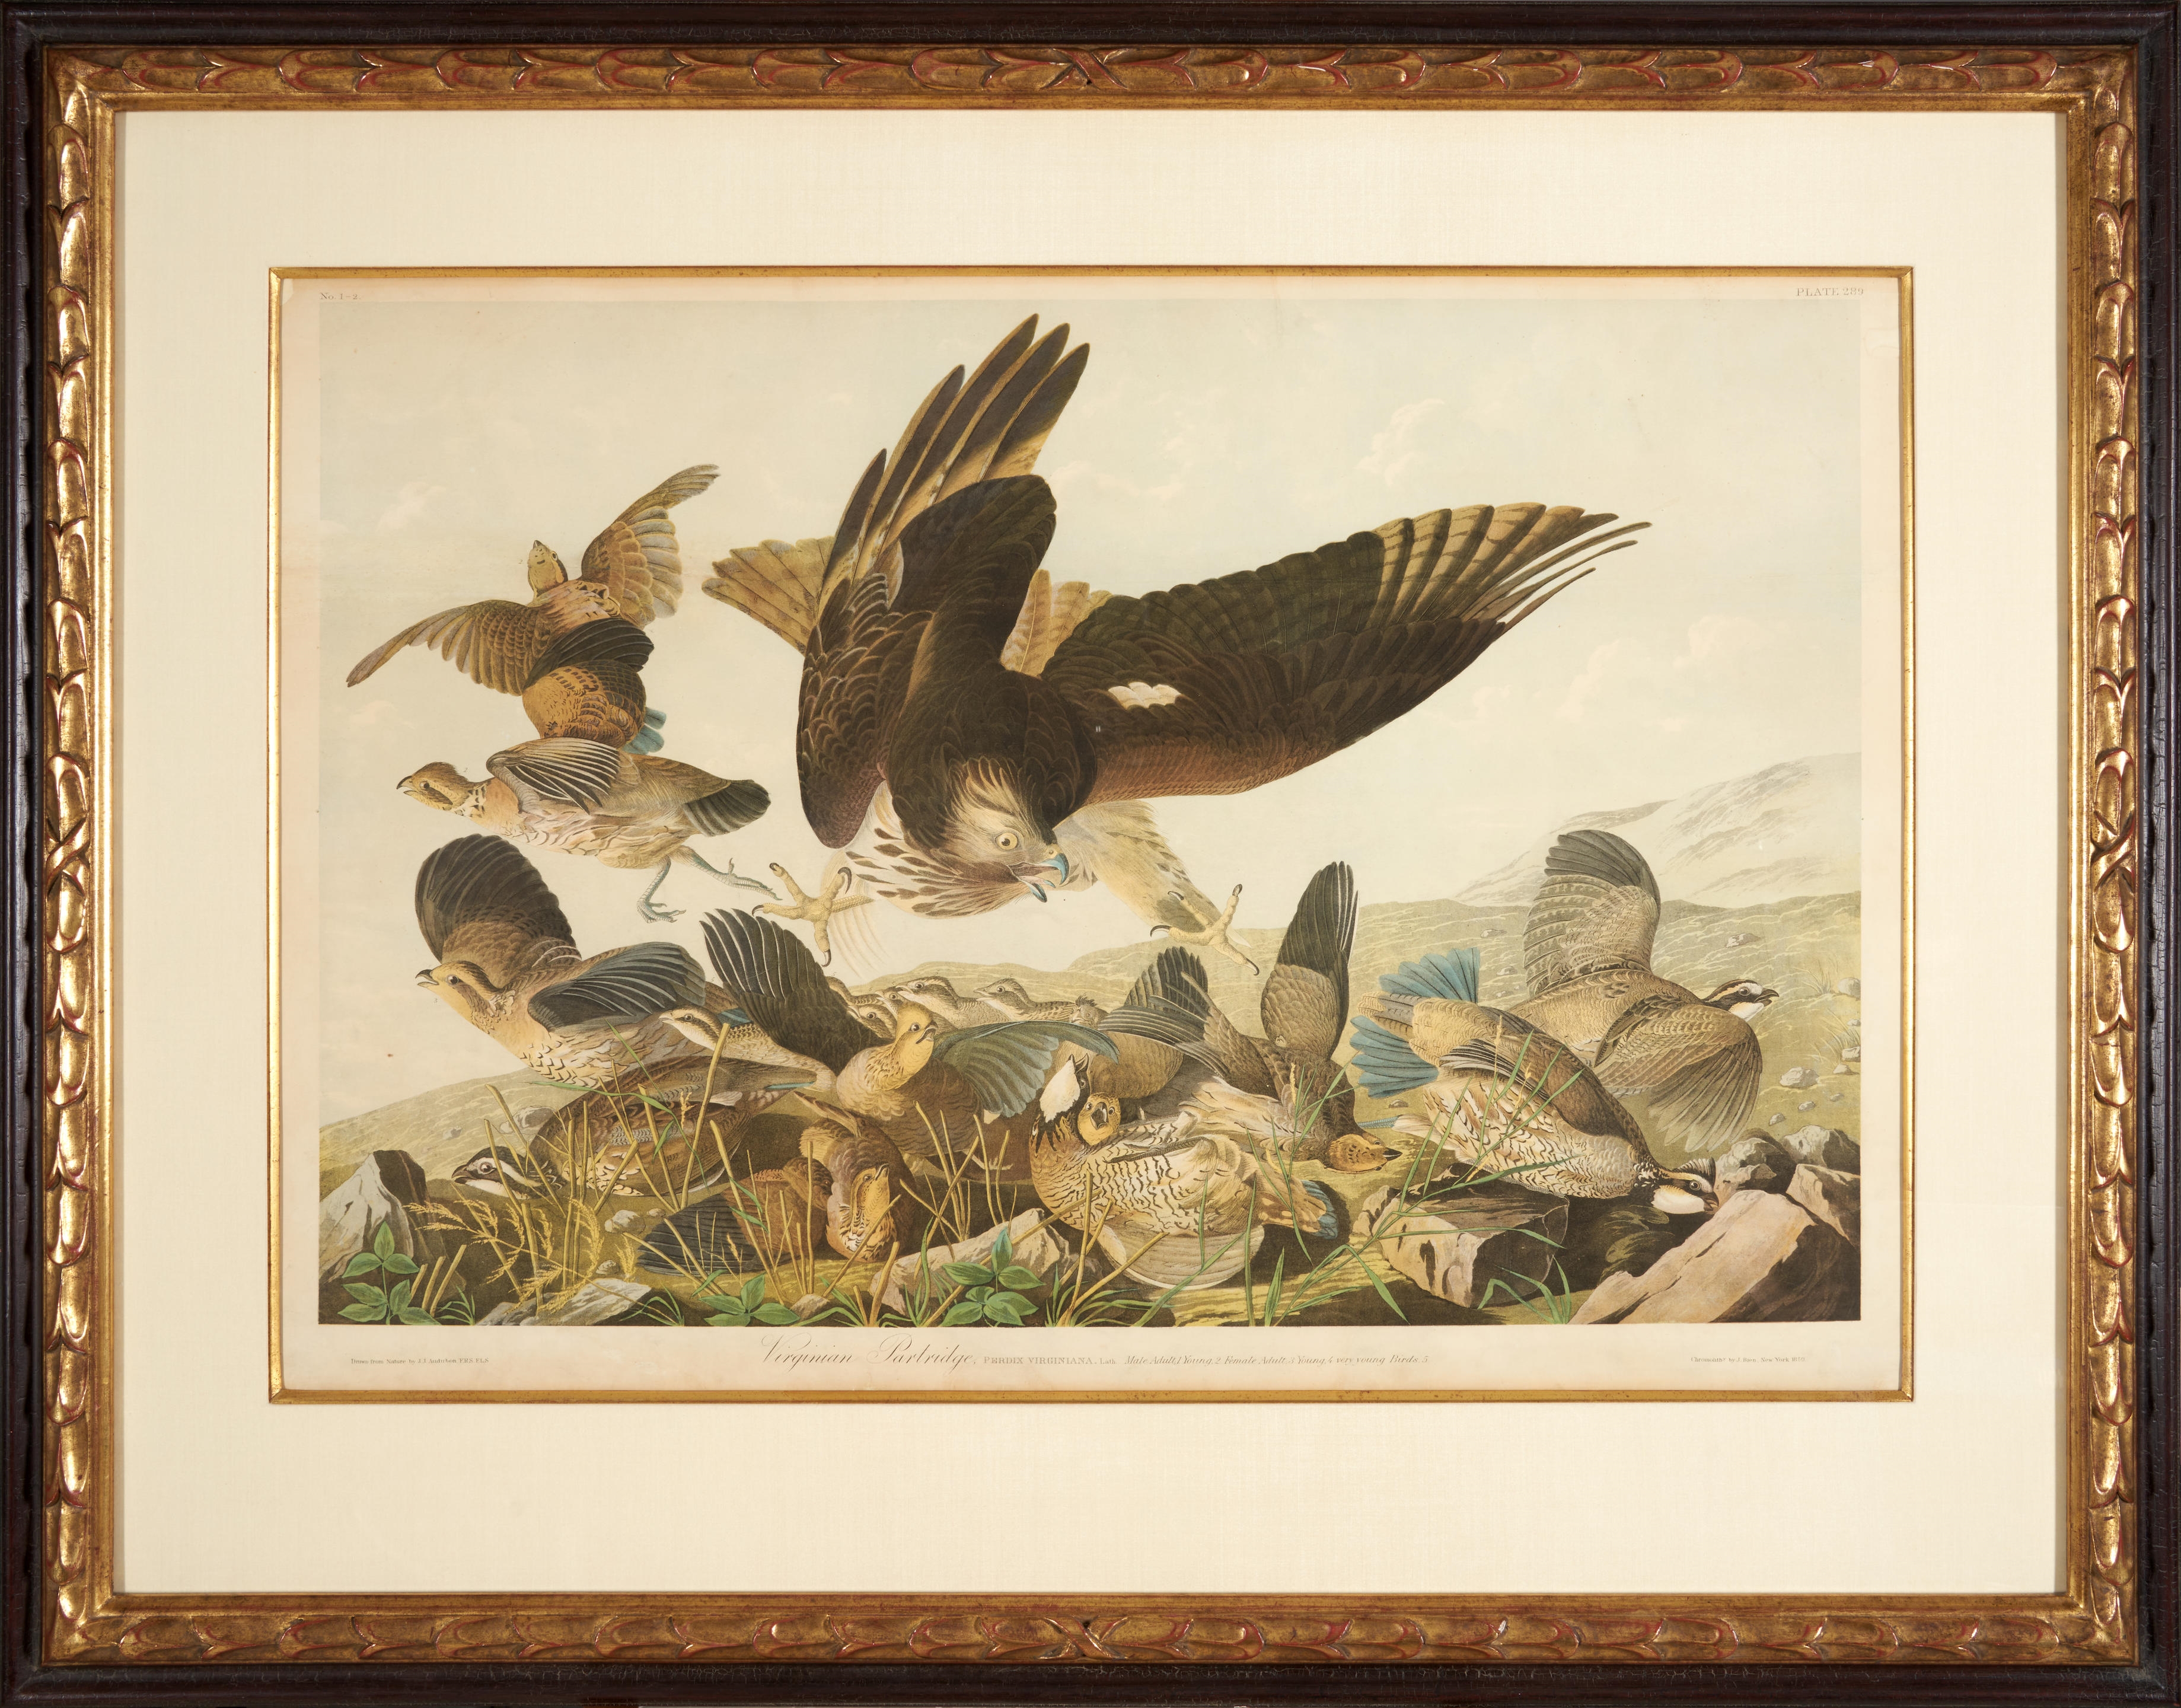 Virginian Partridge (Perdix Virginiana). New York: J. Bien, 1859. by John James Audubon, 1859